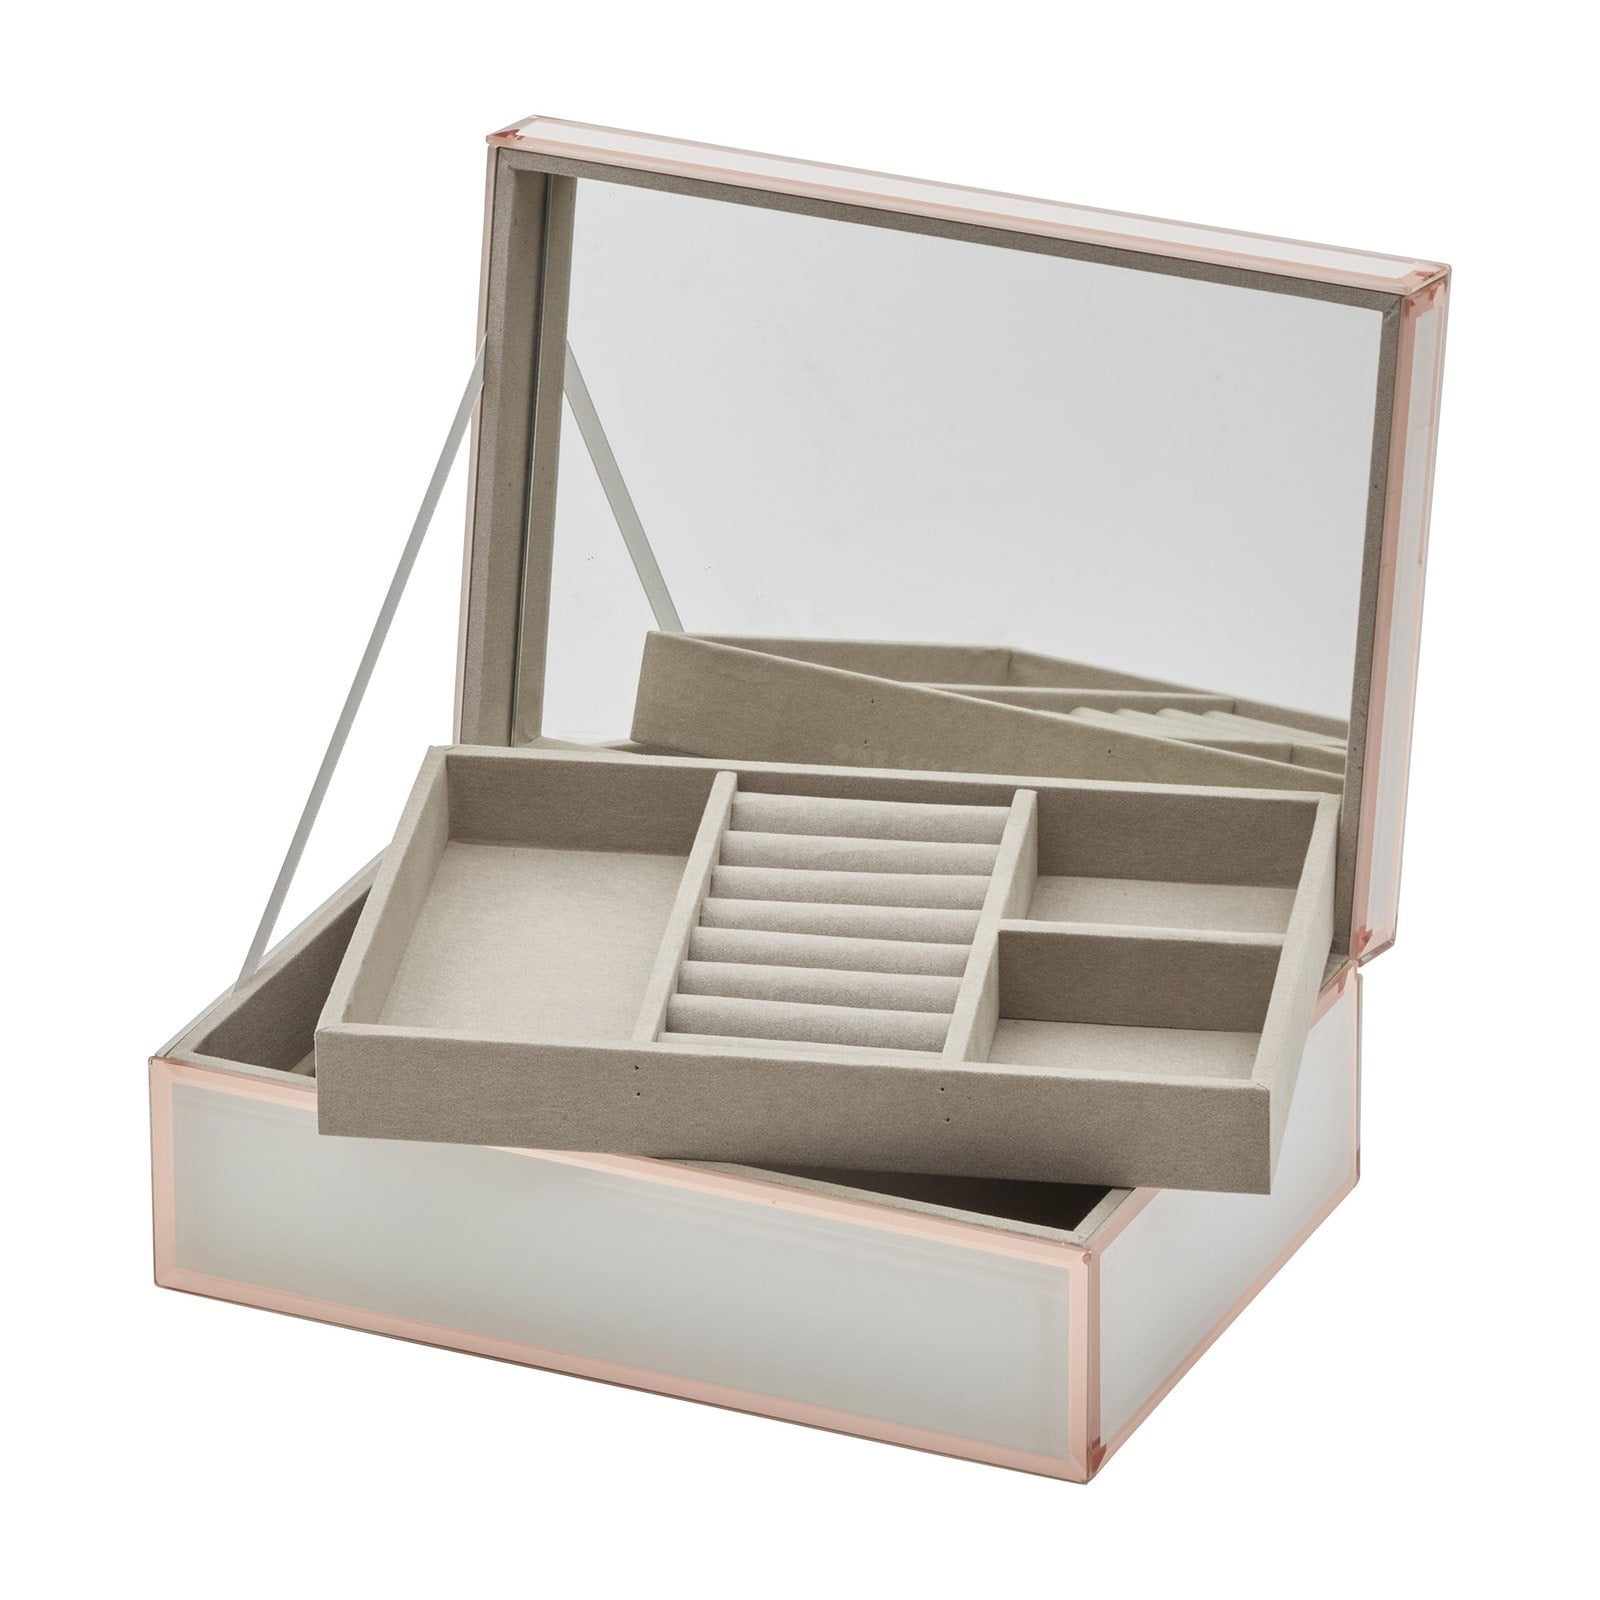 Sara Large Jewellery Box - White - box open, with tray